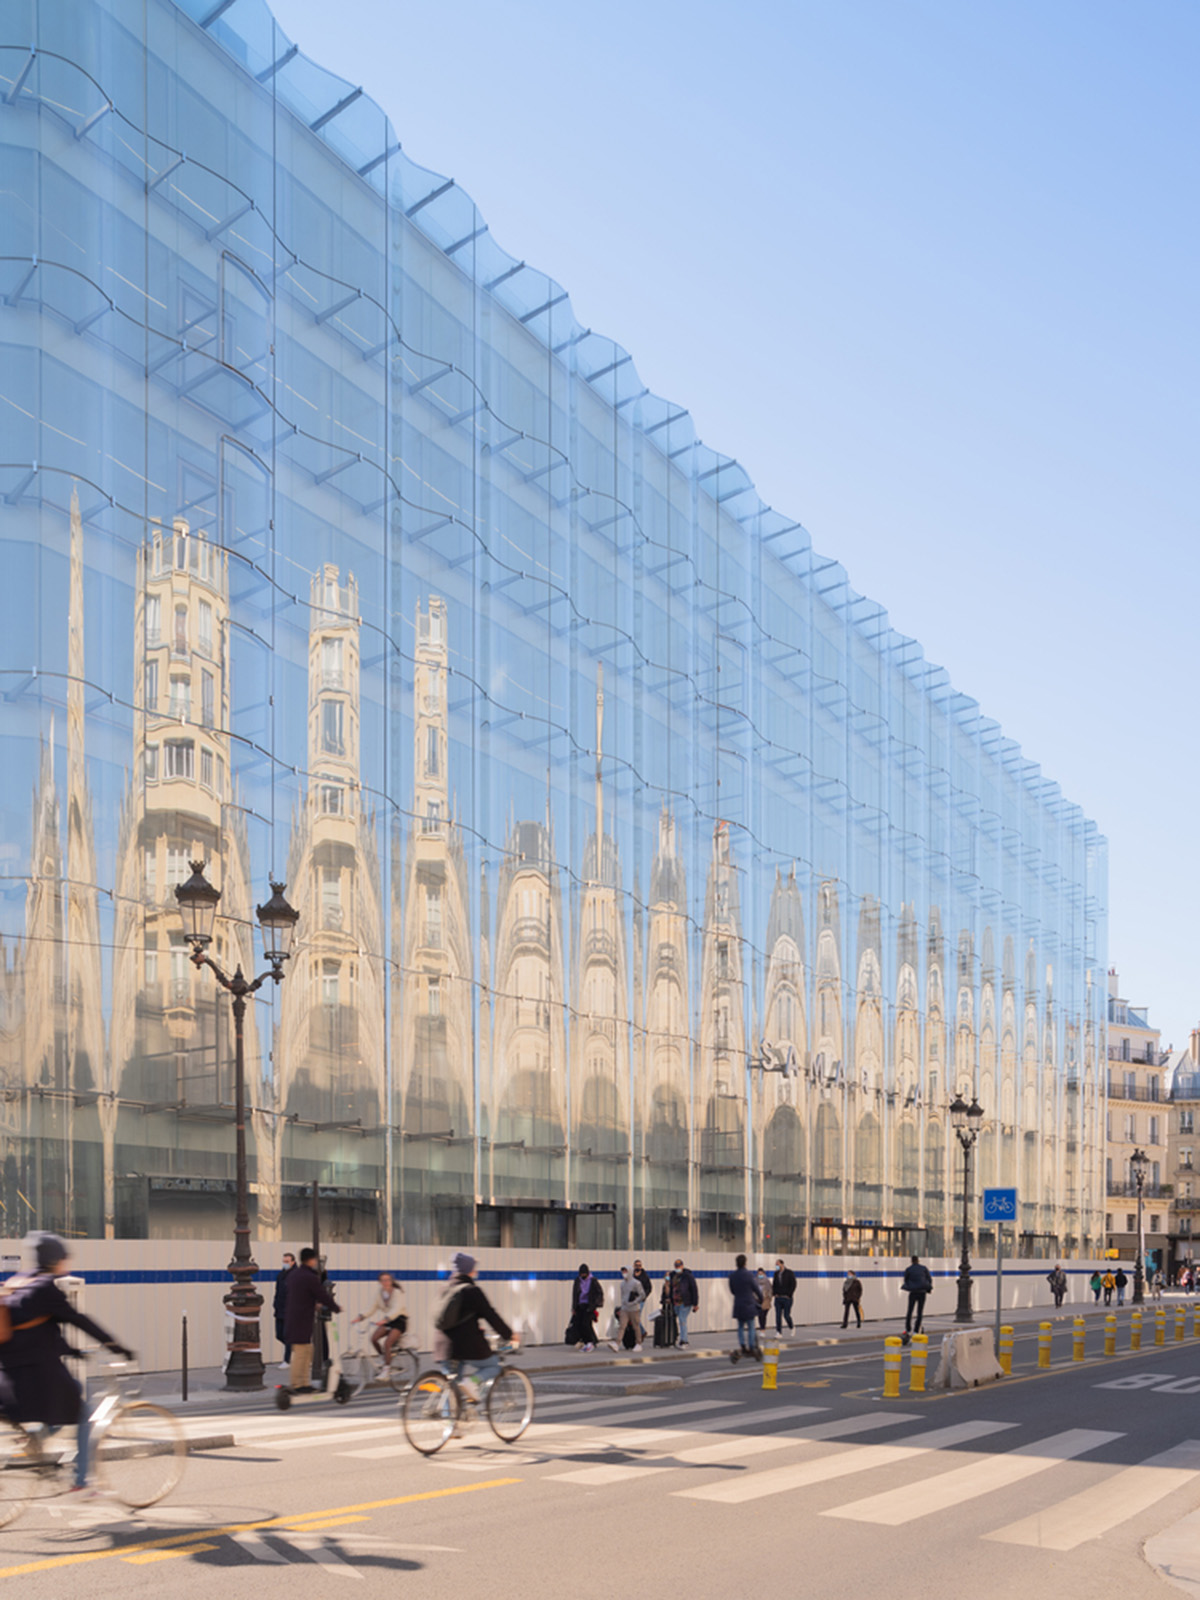 SANAA completes renovation of historic La Samaritaine department store in  Paris